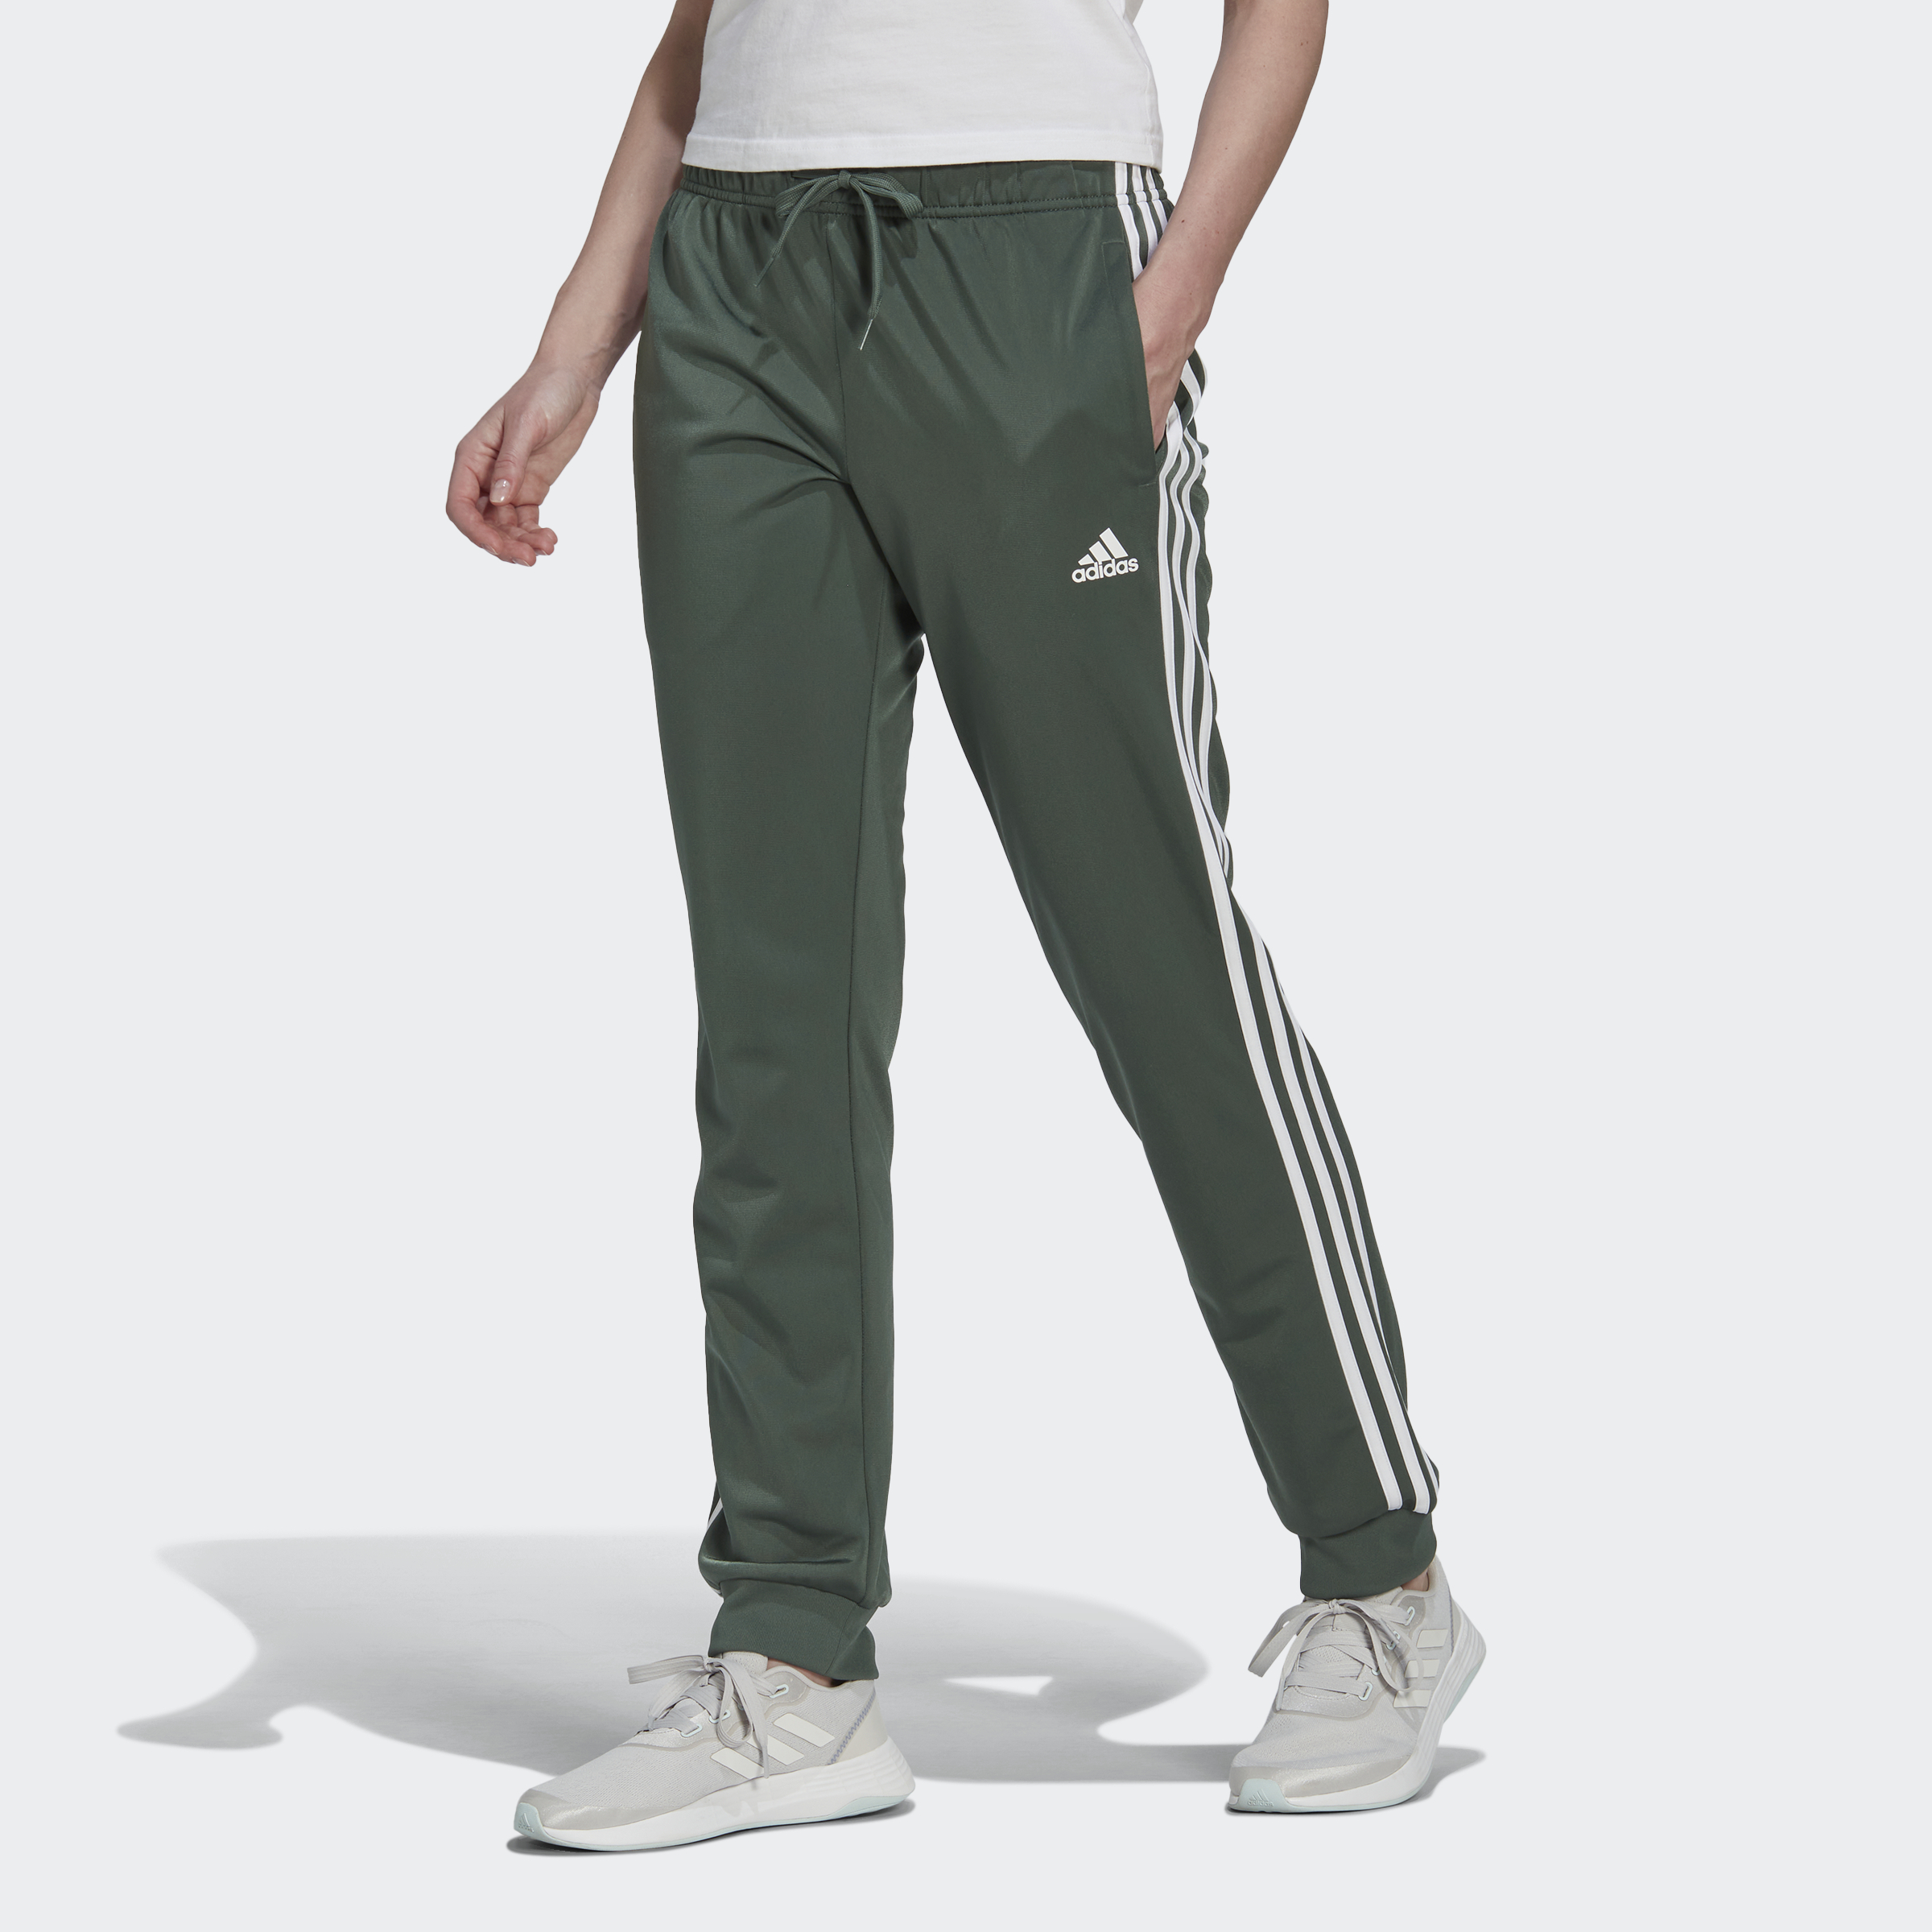 Primegreen Essentials | eBay Tapered 3-Stripes Slim Pants Track Warm-Up